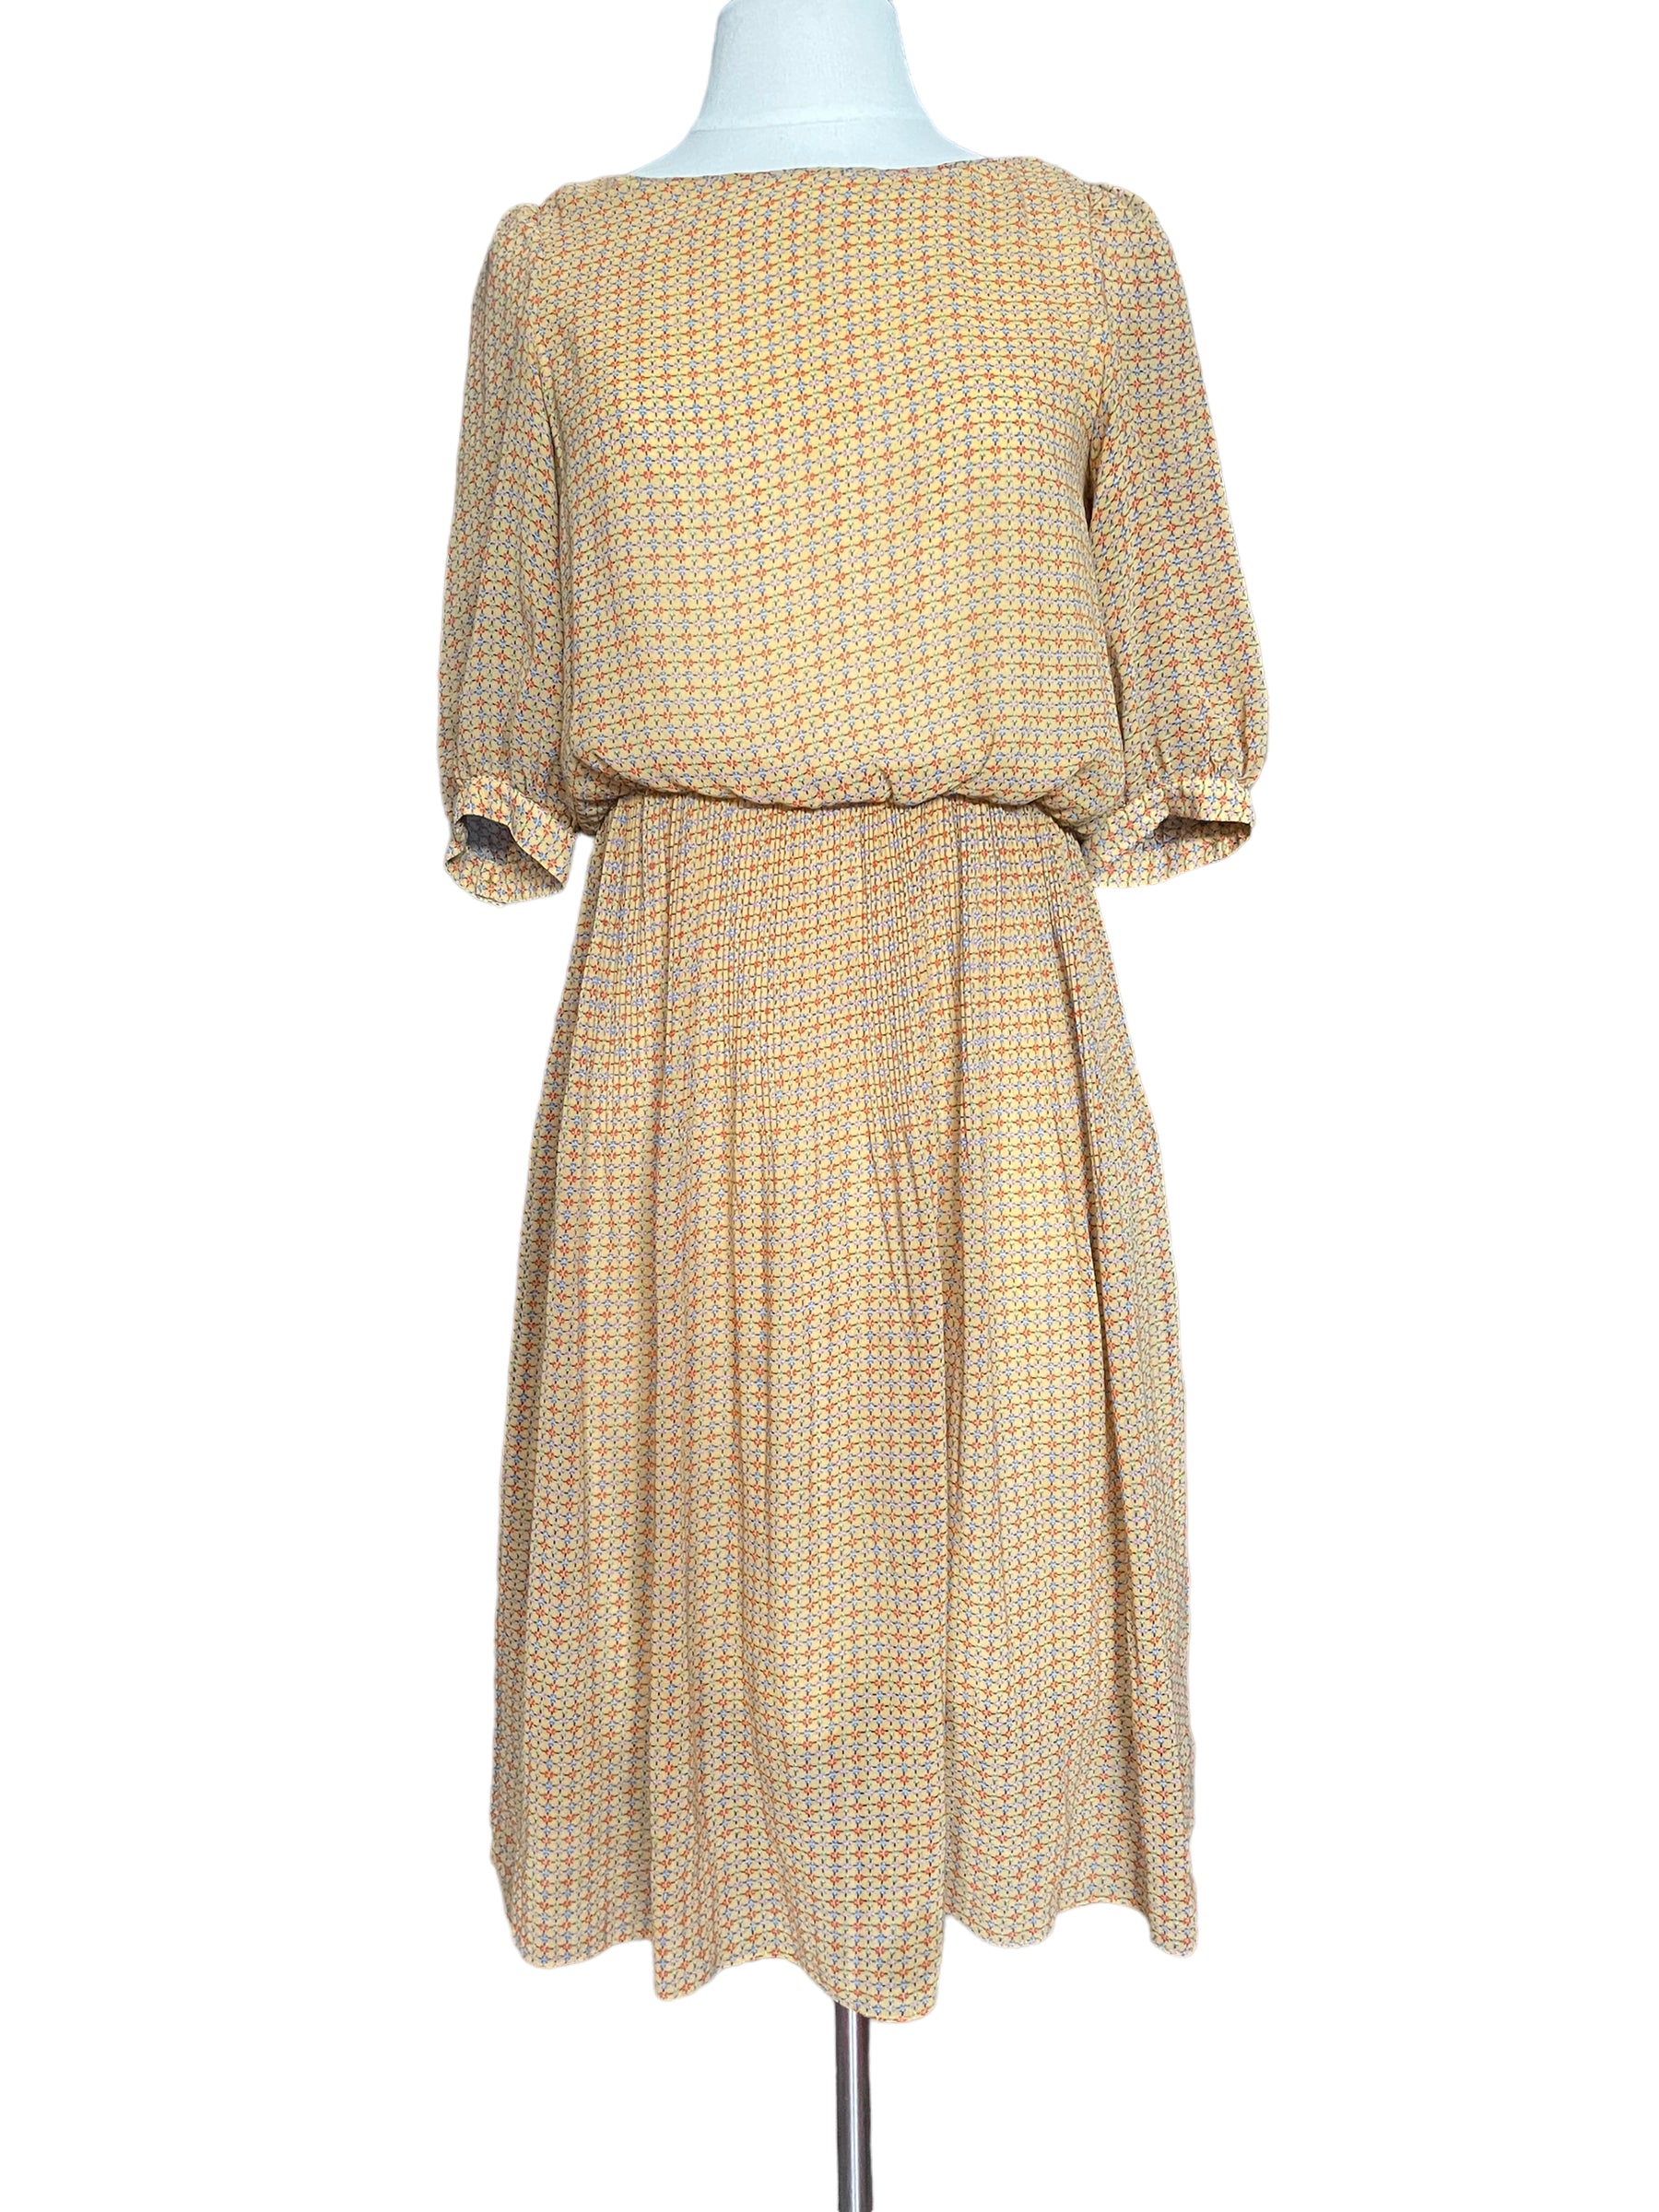 Full front view of Vintage 1950s Parisian Sheer Rayon Dress 